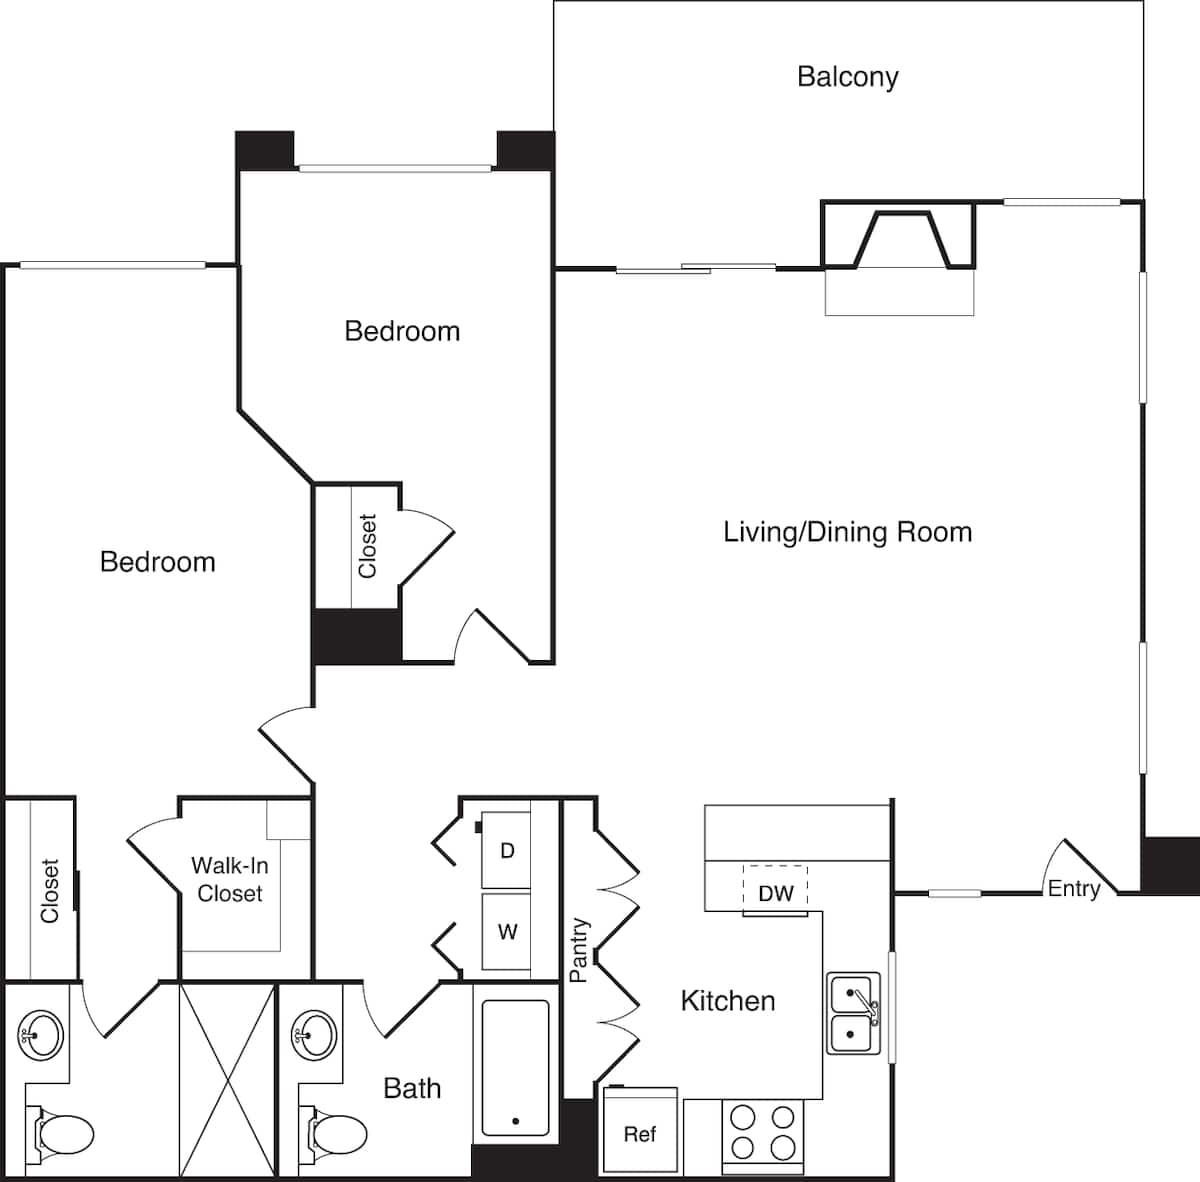 Floorplan diagram for Brentwood 2nd Floor, showing 2 bedroom